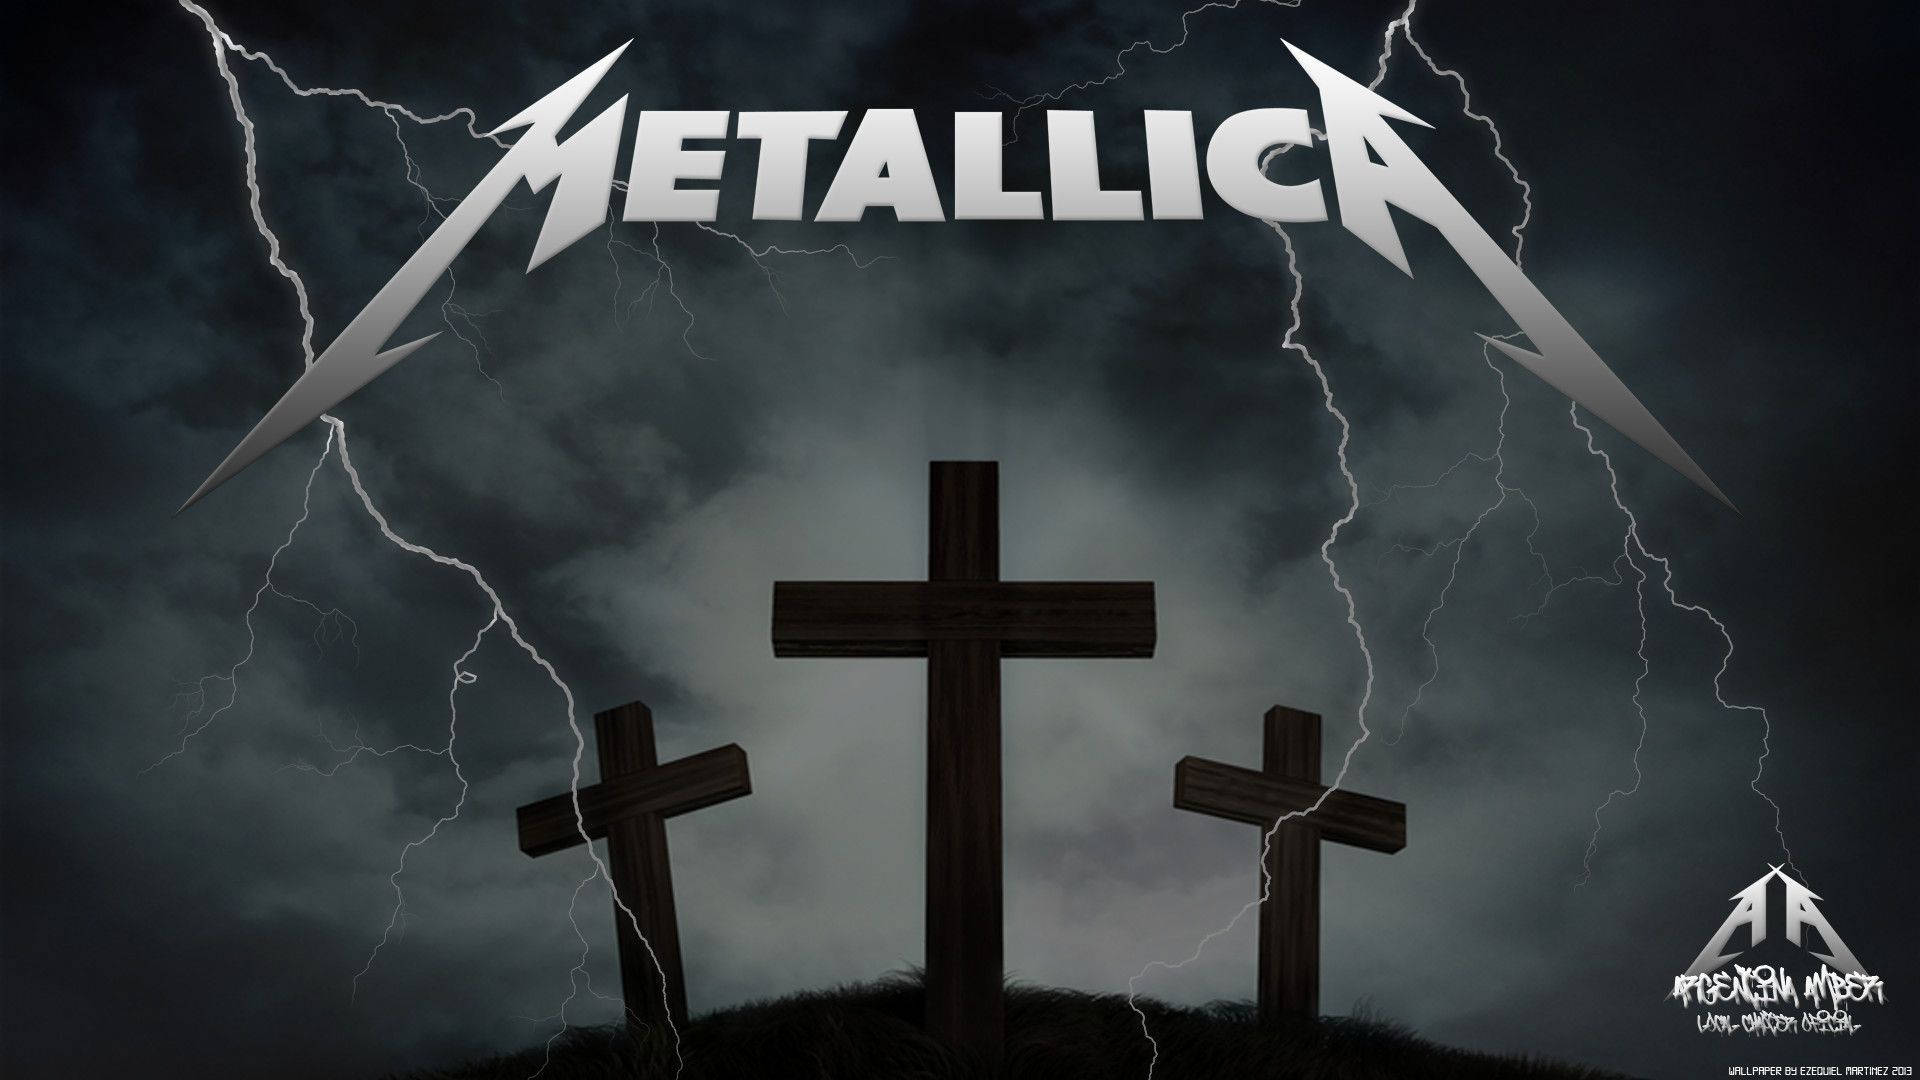 The legendary thrash metal gods Metallica perform their defining 